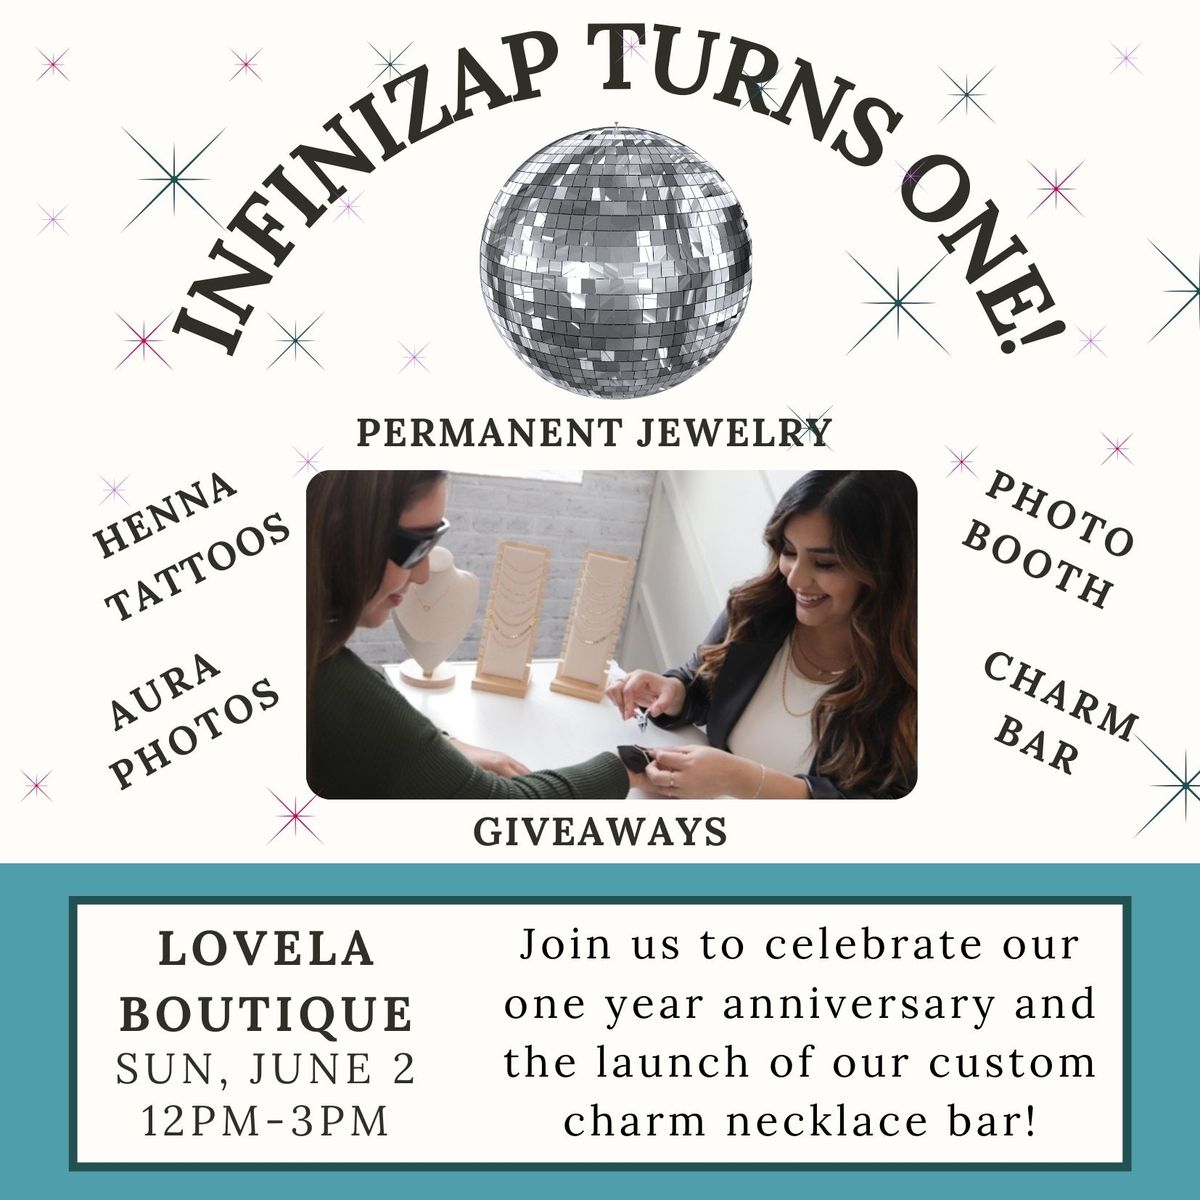 Infini Zap Turns One! (Permanent Jewelry & Charm Bar Launch)